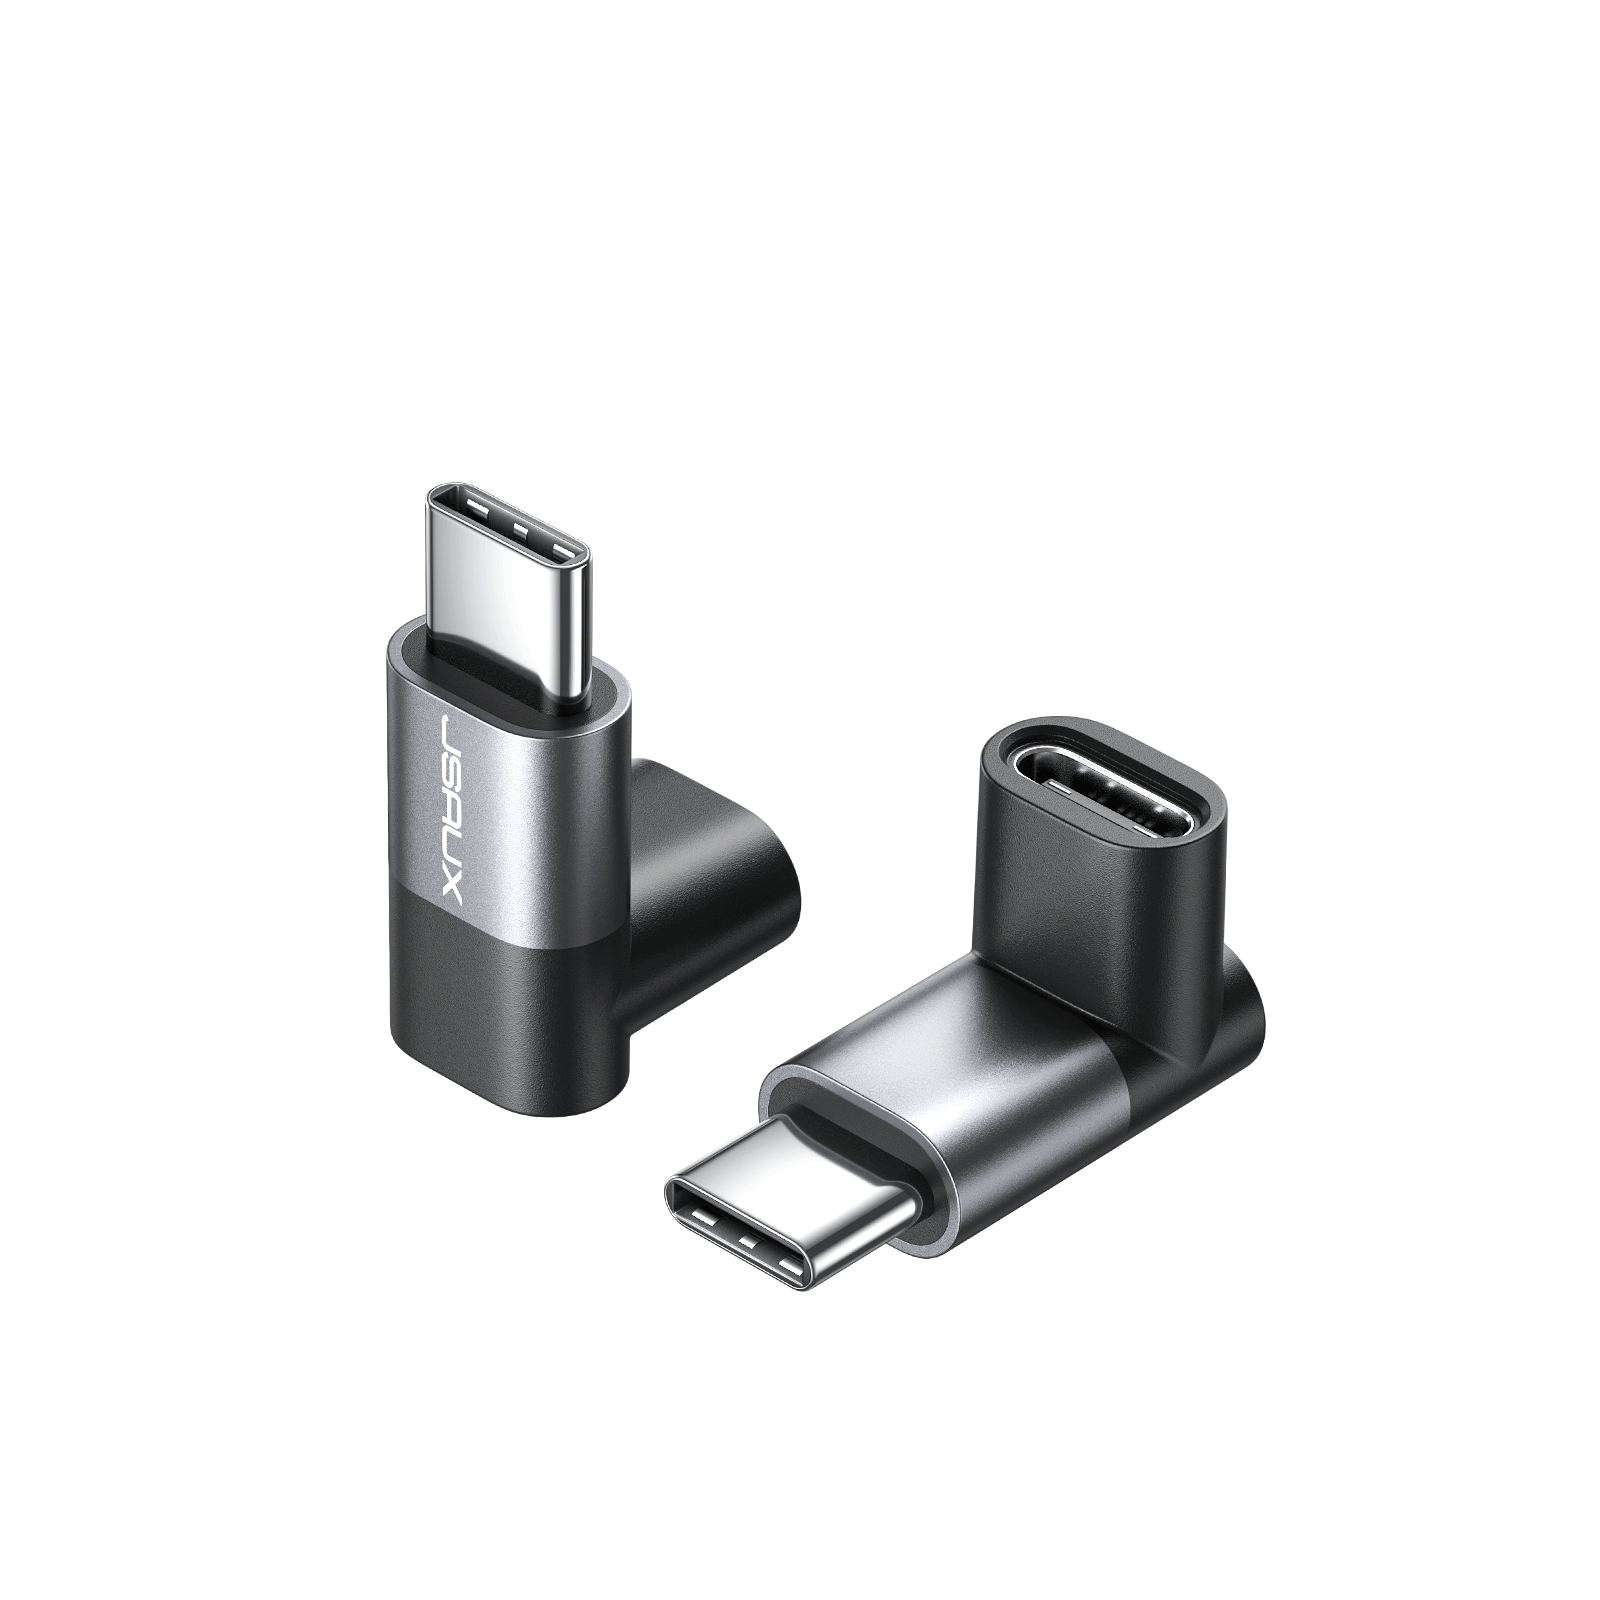 90° USB-C Right Angle Adapter